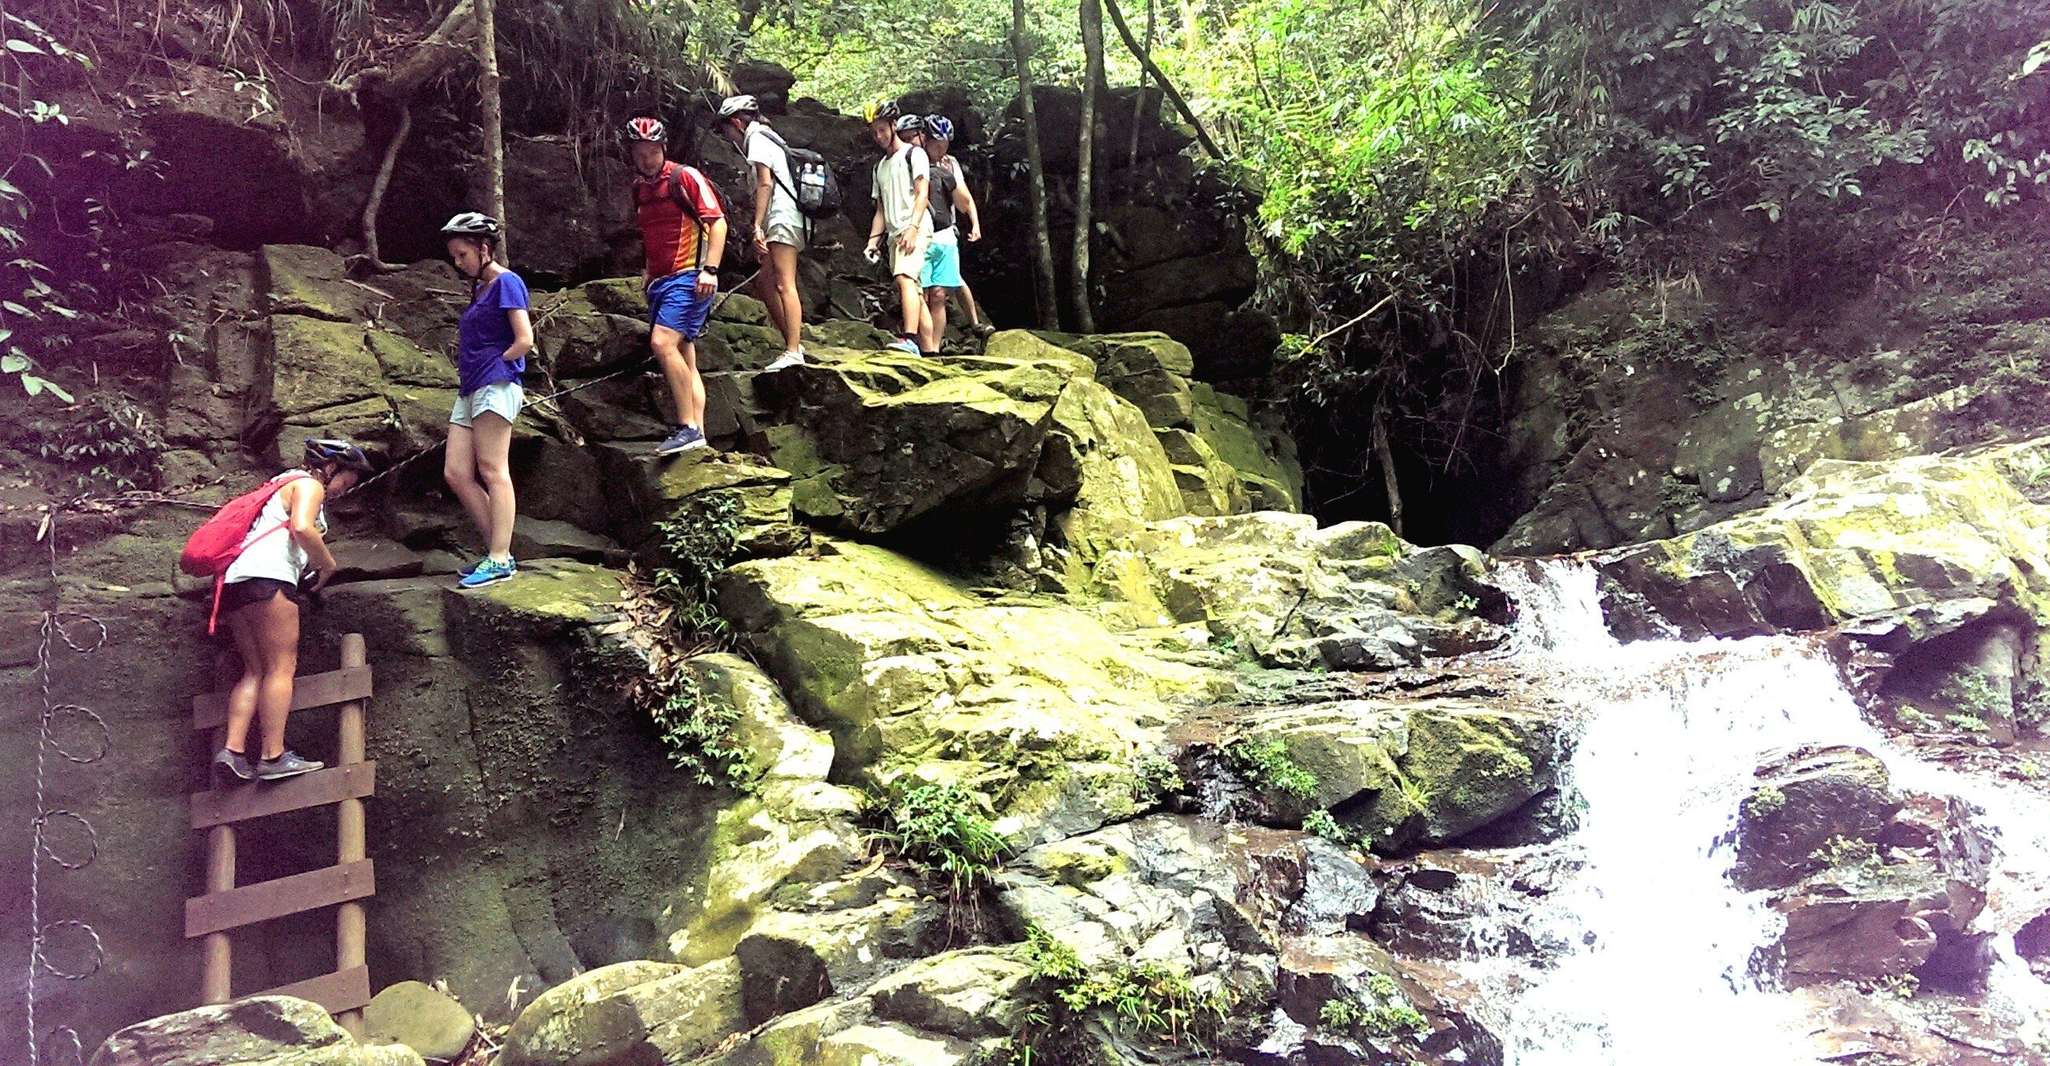 Bach Ma National park Trekking tour from Hue/DaNang/Hoian - Housity